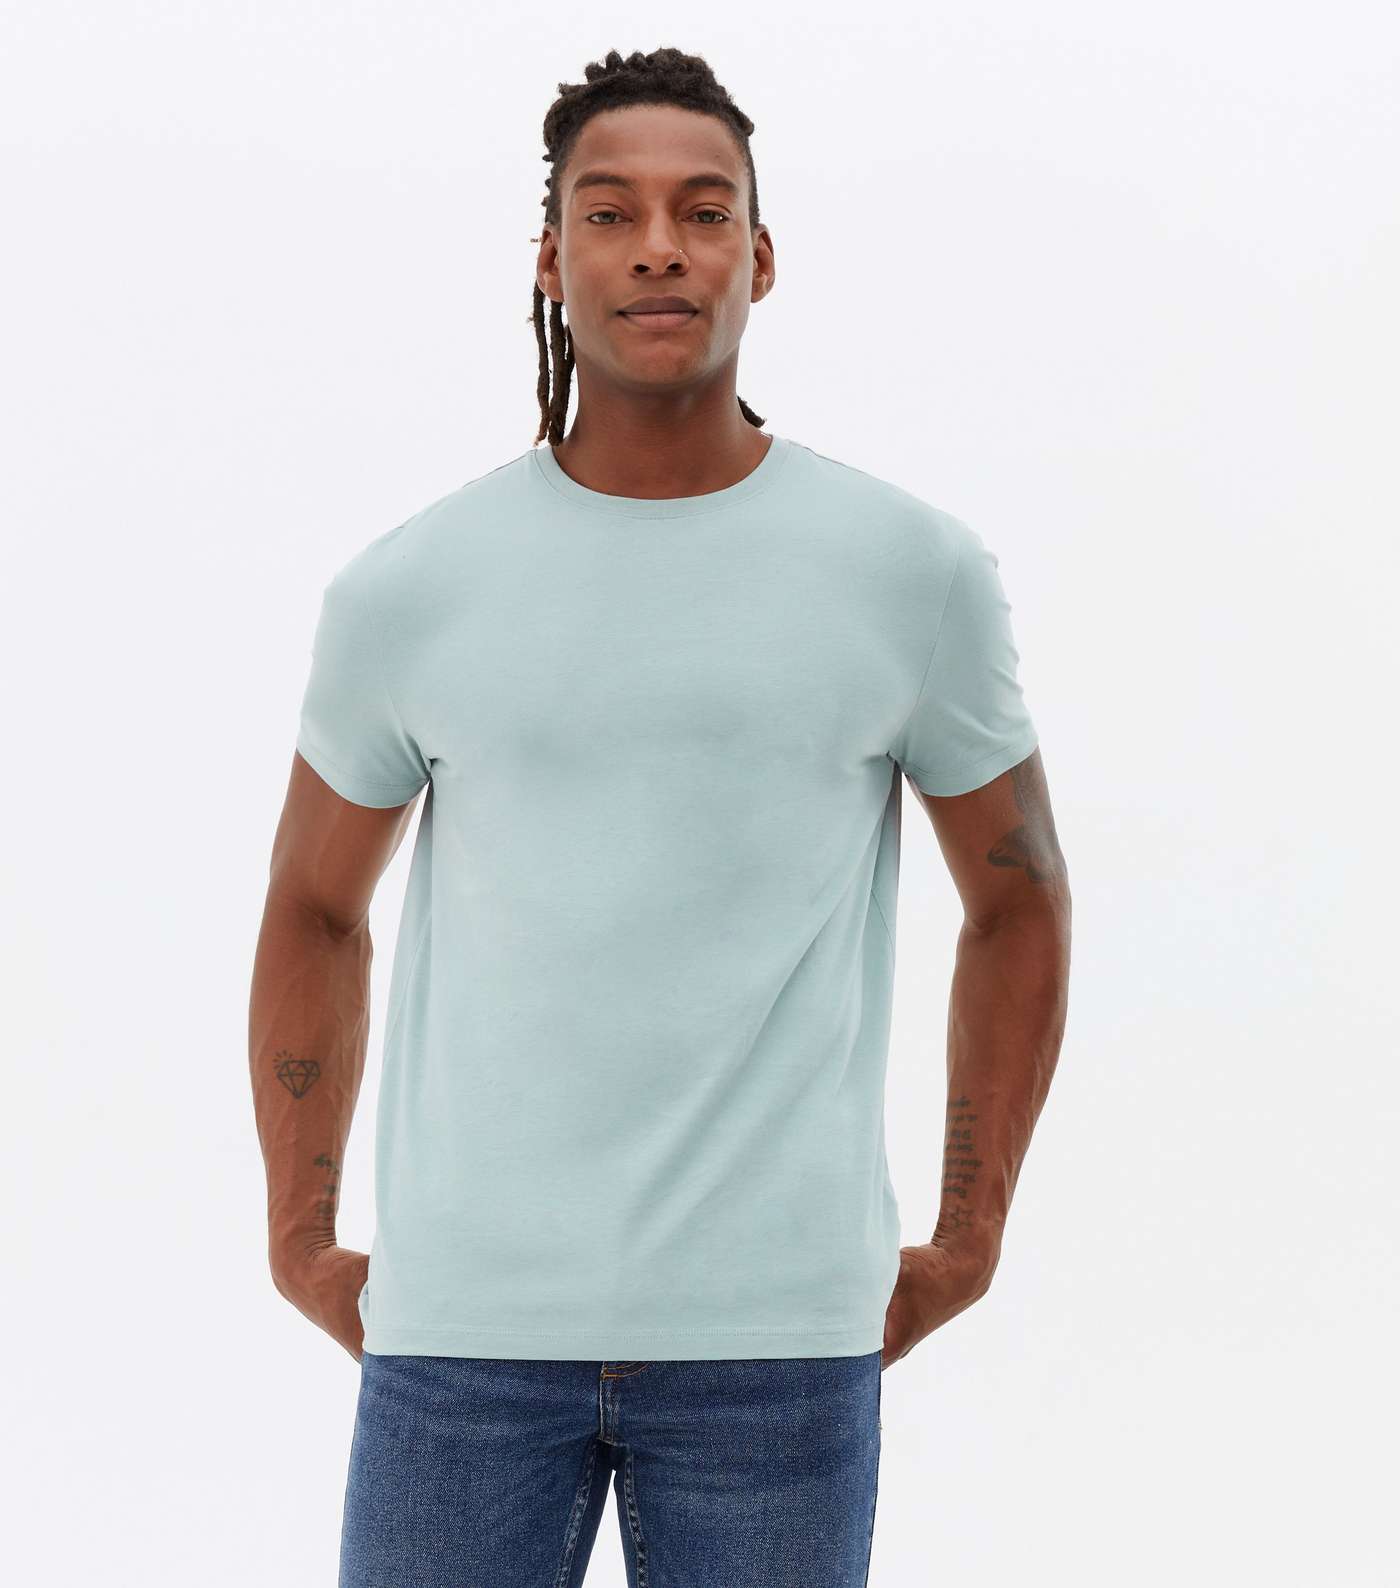 Olive Short Sleeve Crew Neck T-Shirt